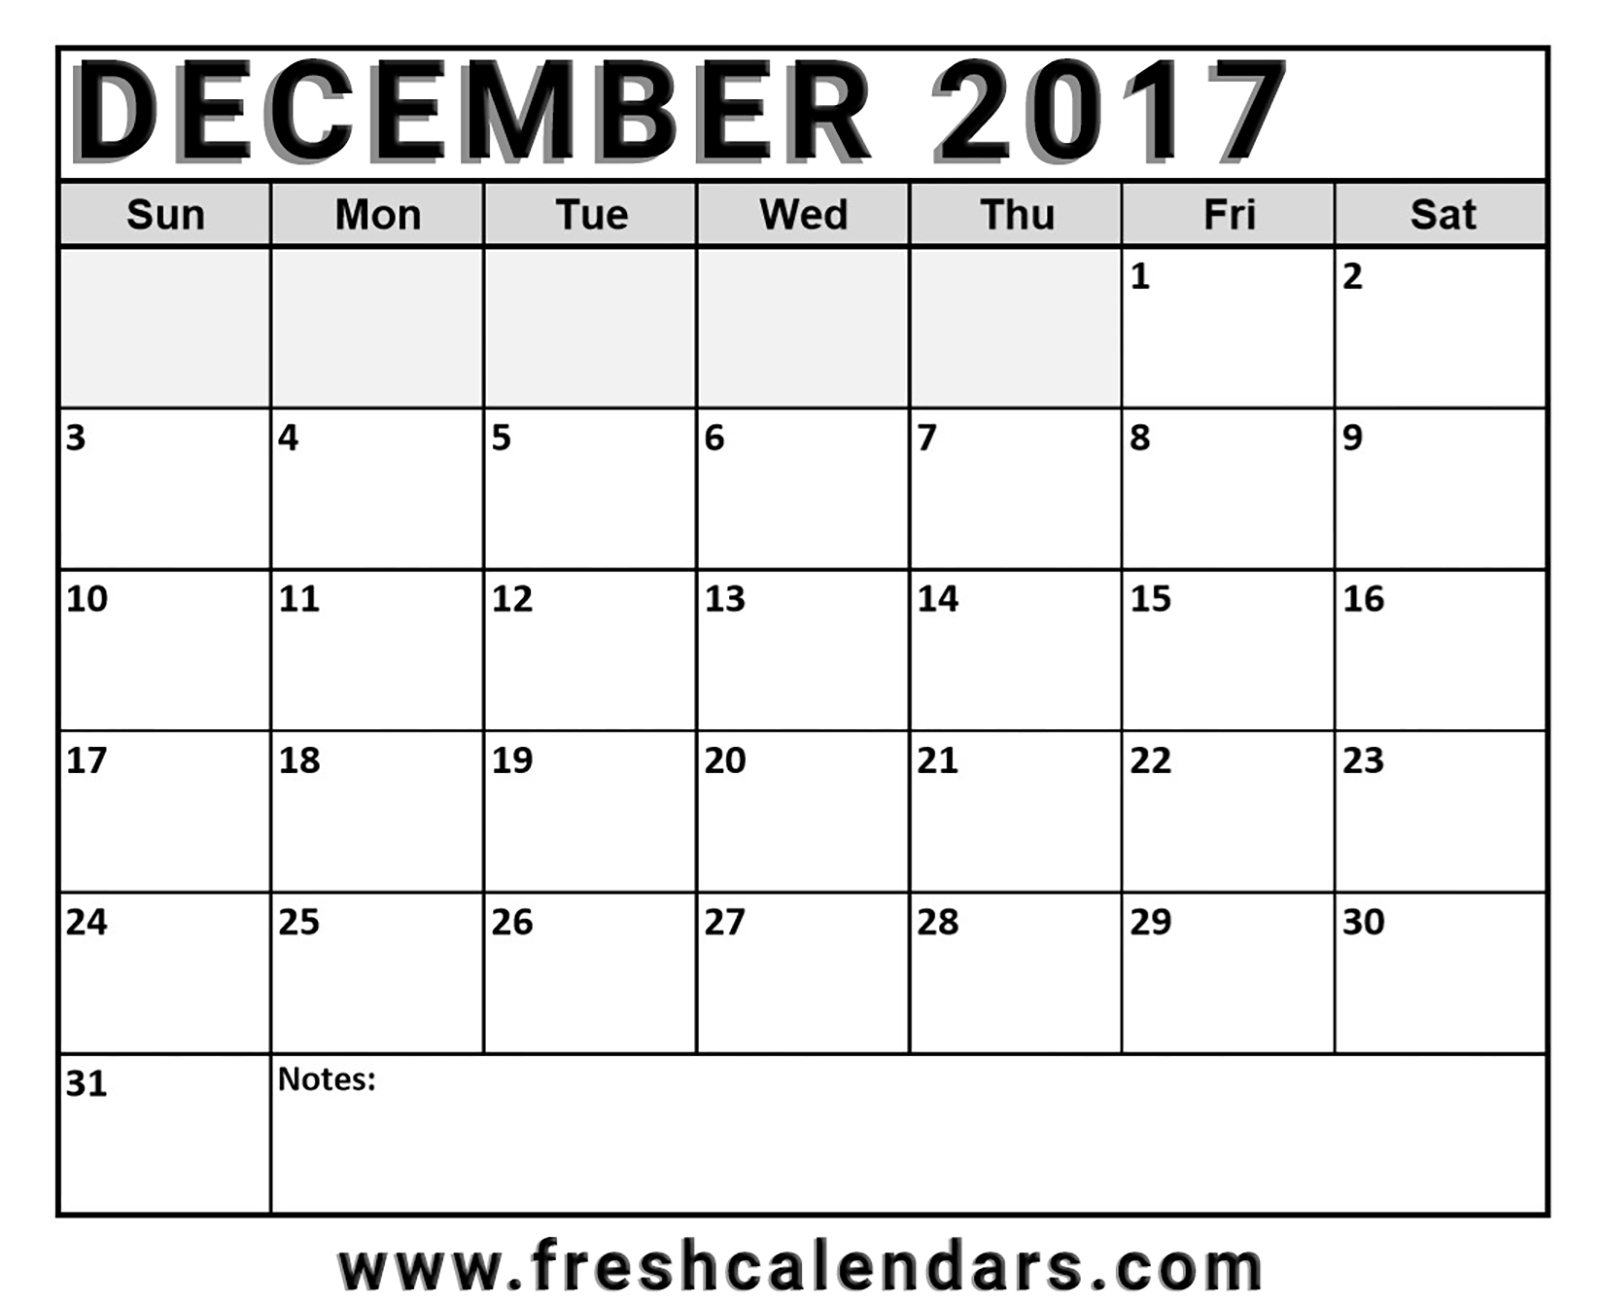 Dec 2017 Printable Calendar | Hauck Mansion within Printable Nov Dec 17 Calendar